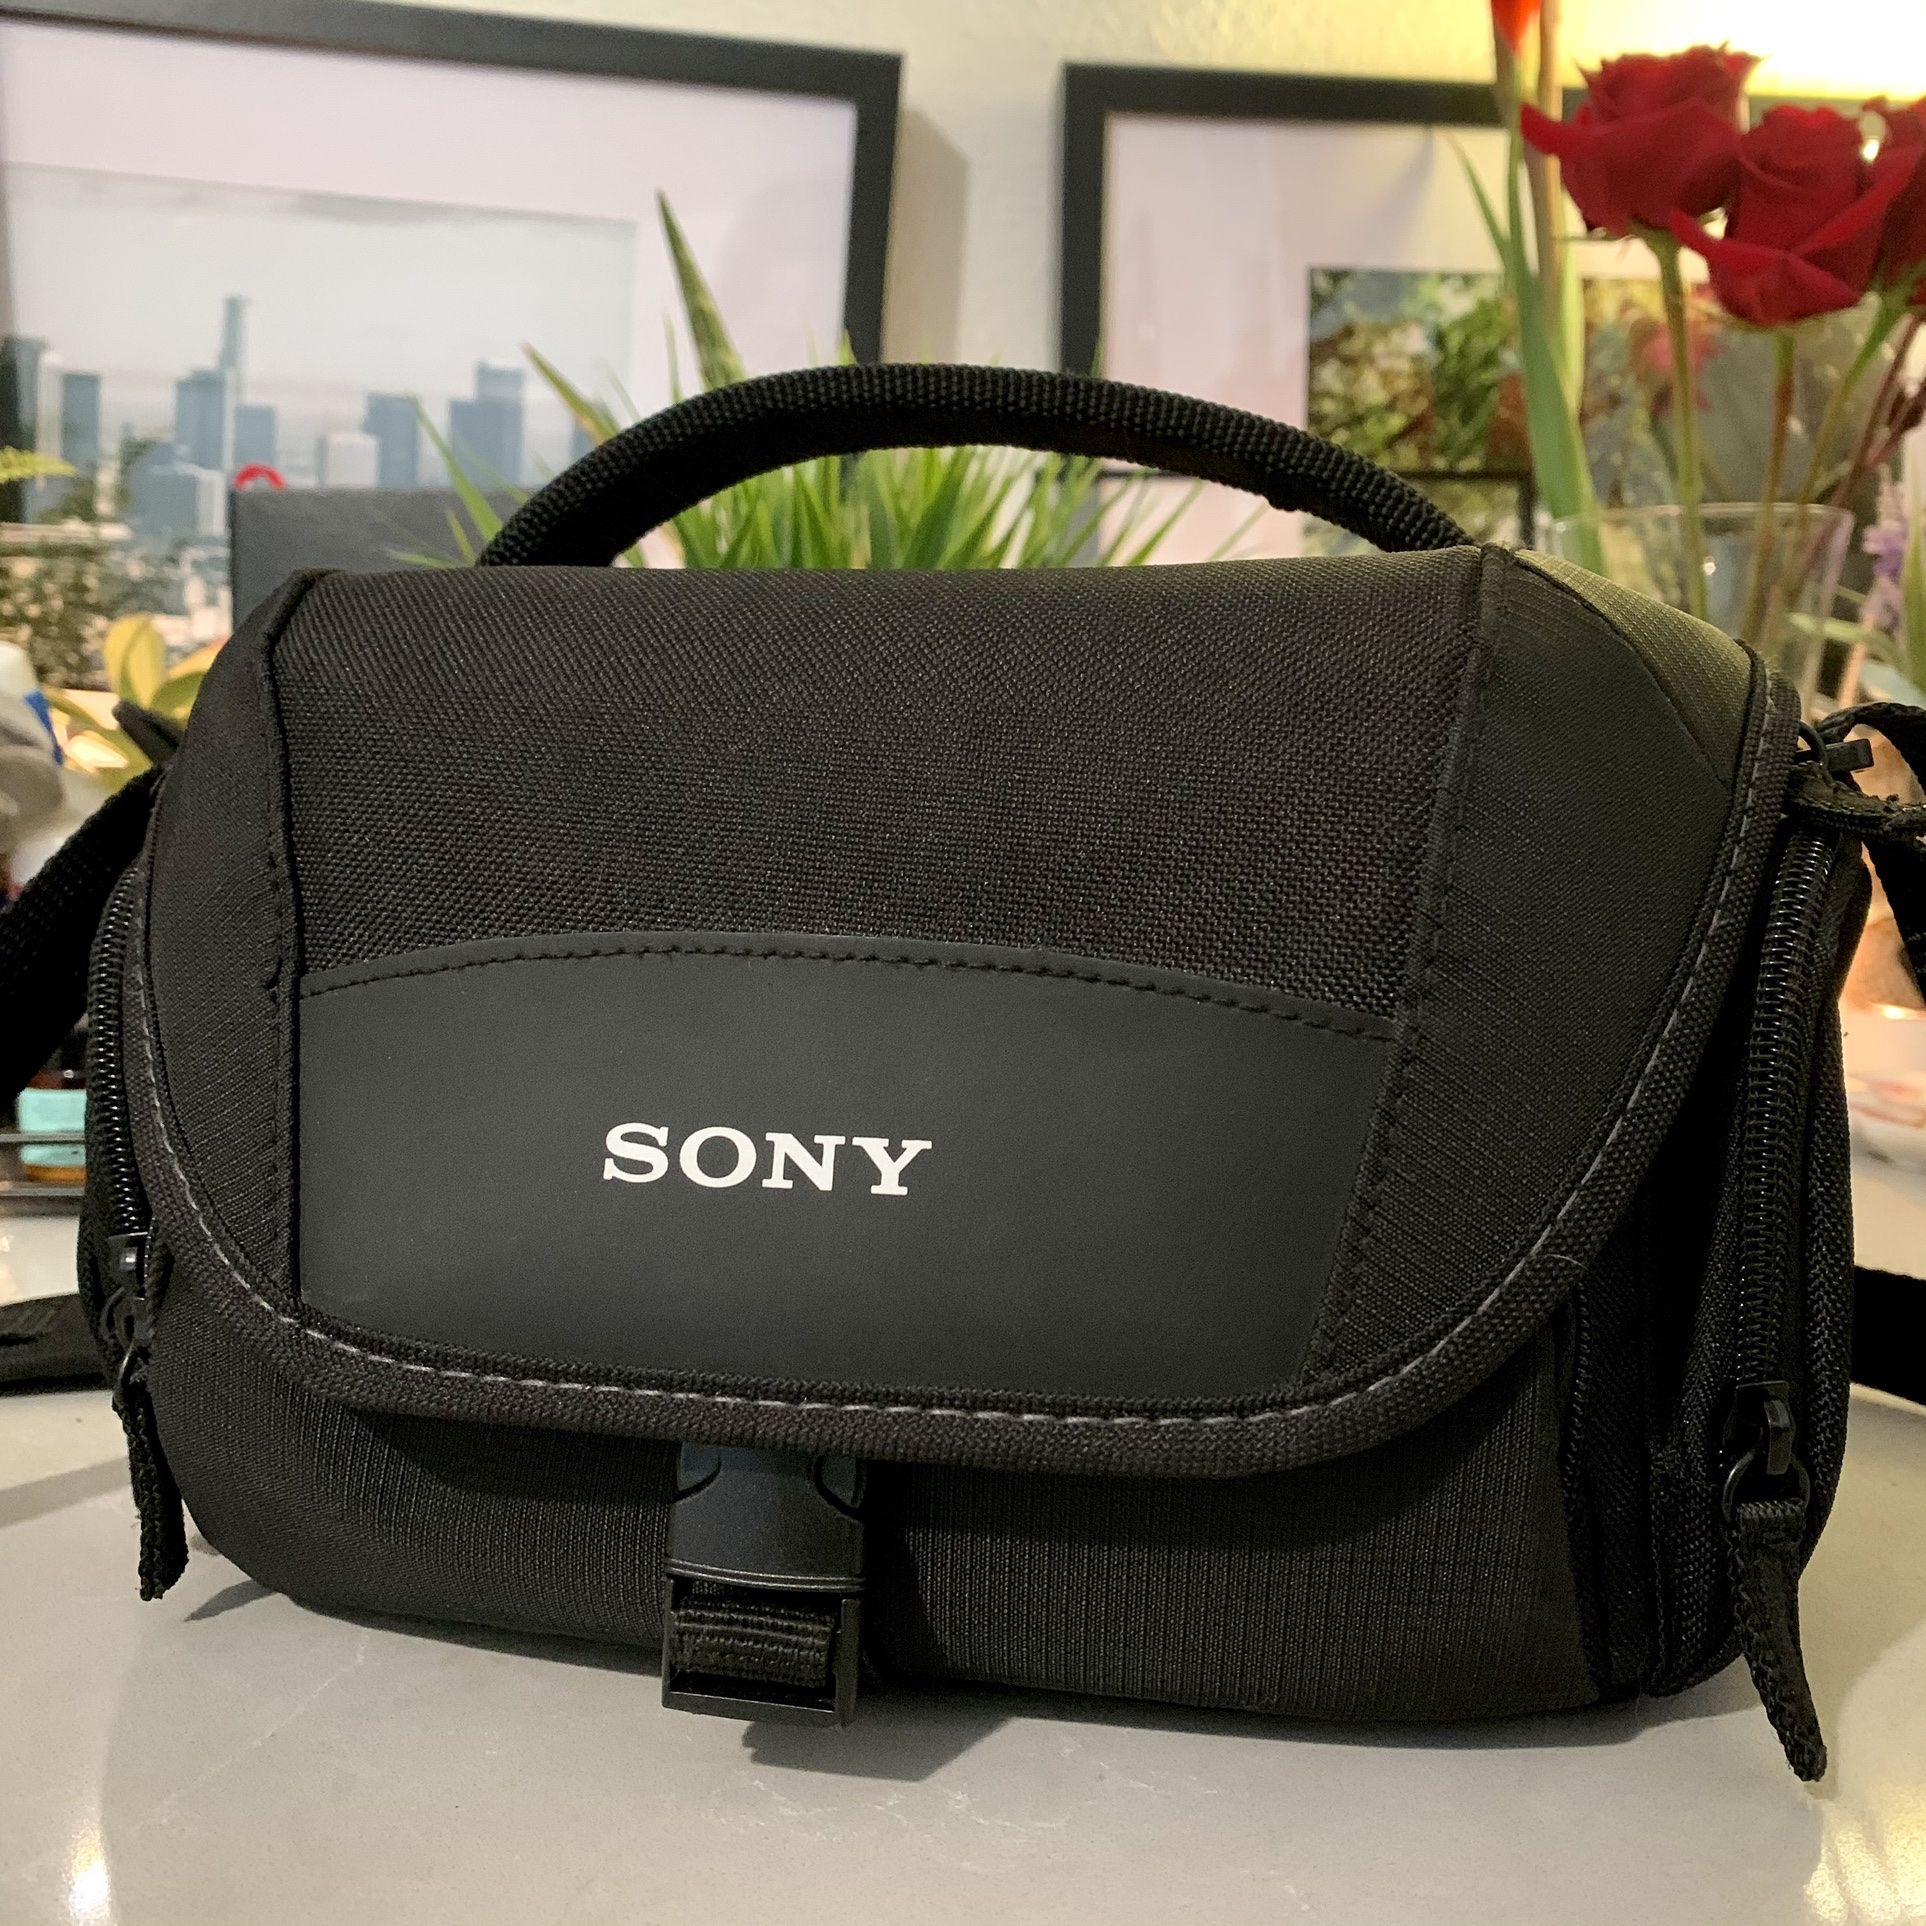 Sony LCSU21 Camera Carrying Case - Black